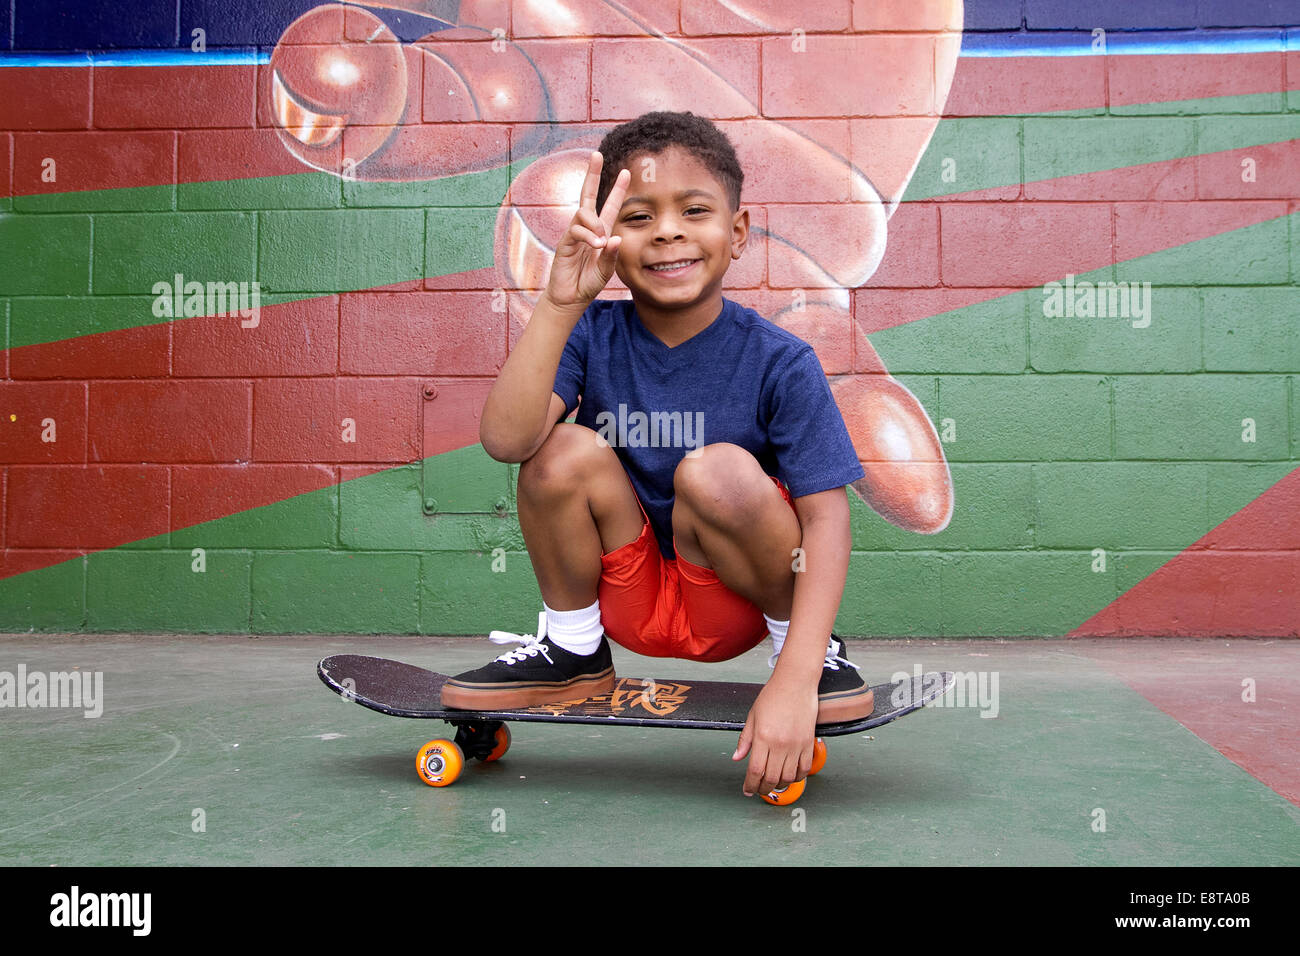 Chico afroamericano sentado en patineta por urbano mural Foto de stock